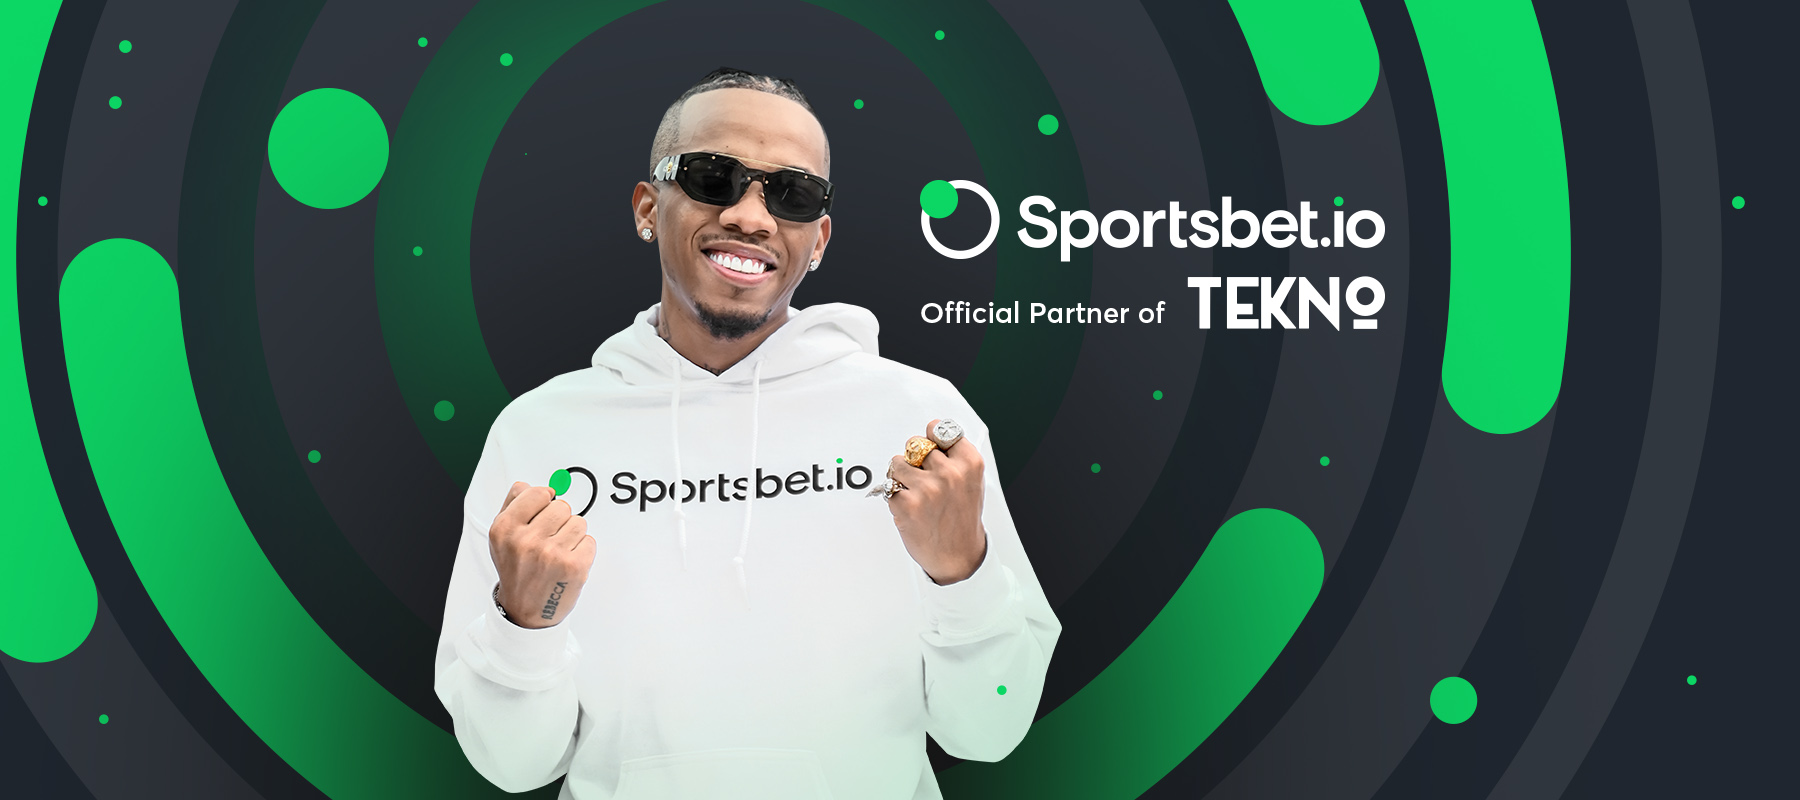 Sportsbet.io 公布最新合作，Tekno Miles担任全球大使